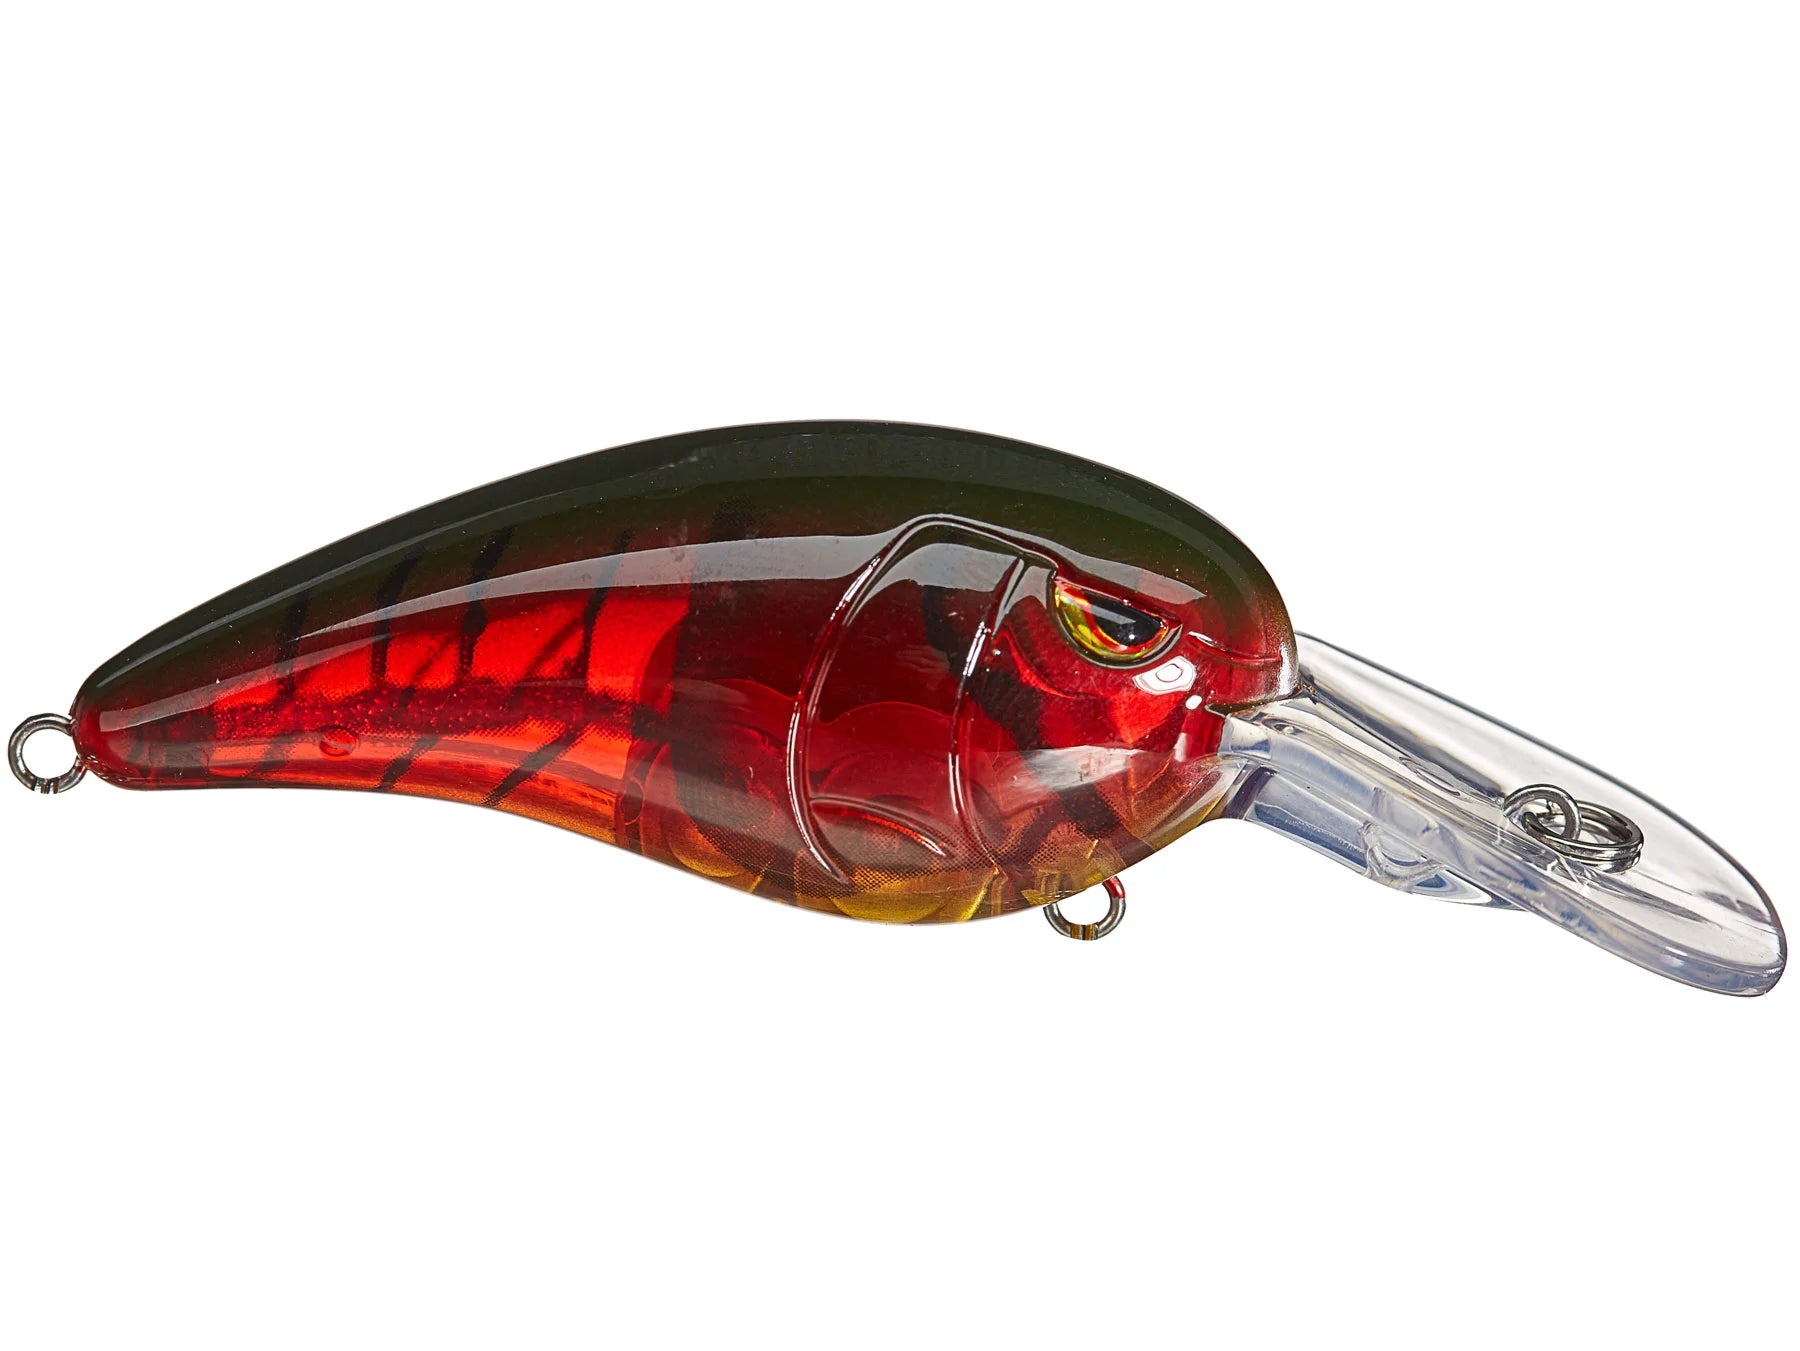 Buy red-crawfish SPRO RKCRAWLER MD 55 CRANKBAIT